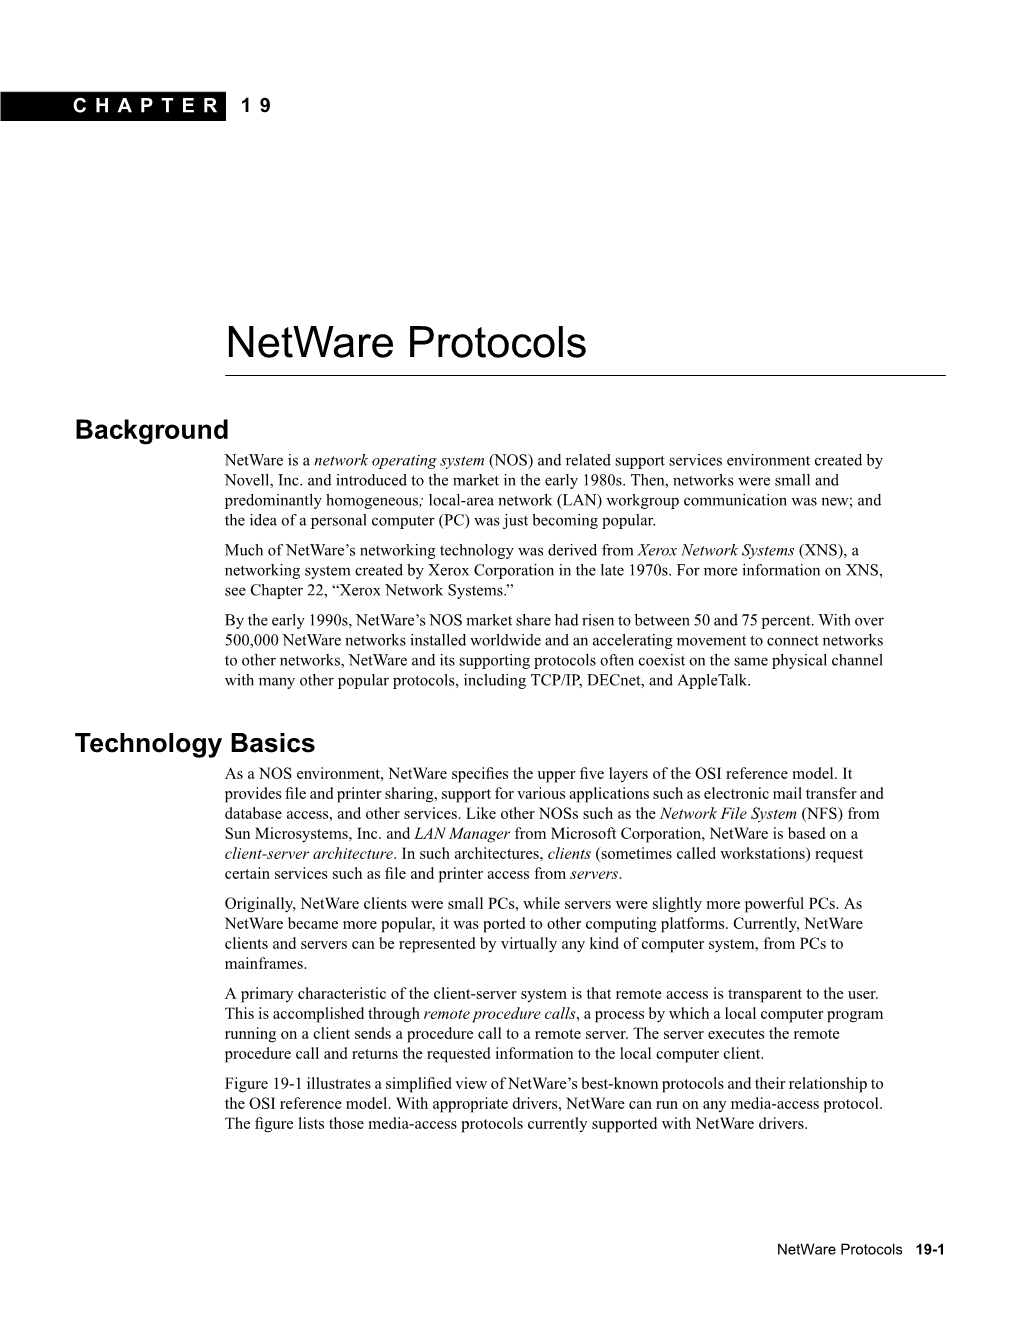 Netware Protocols